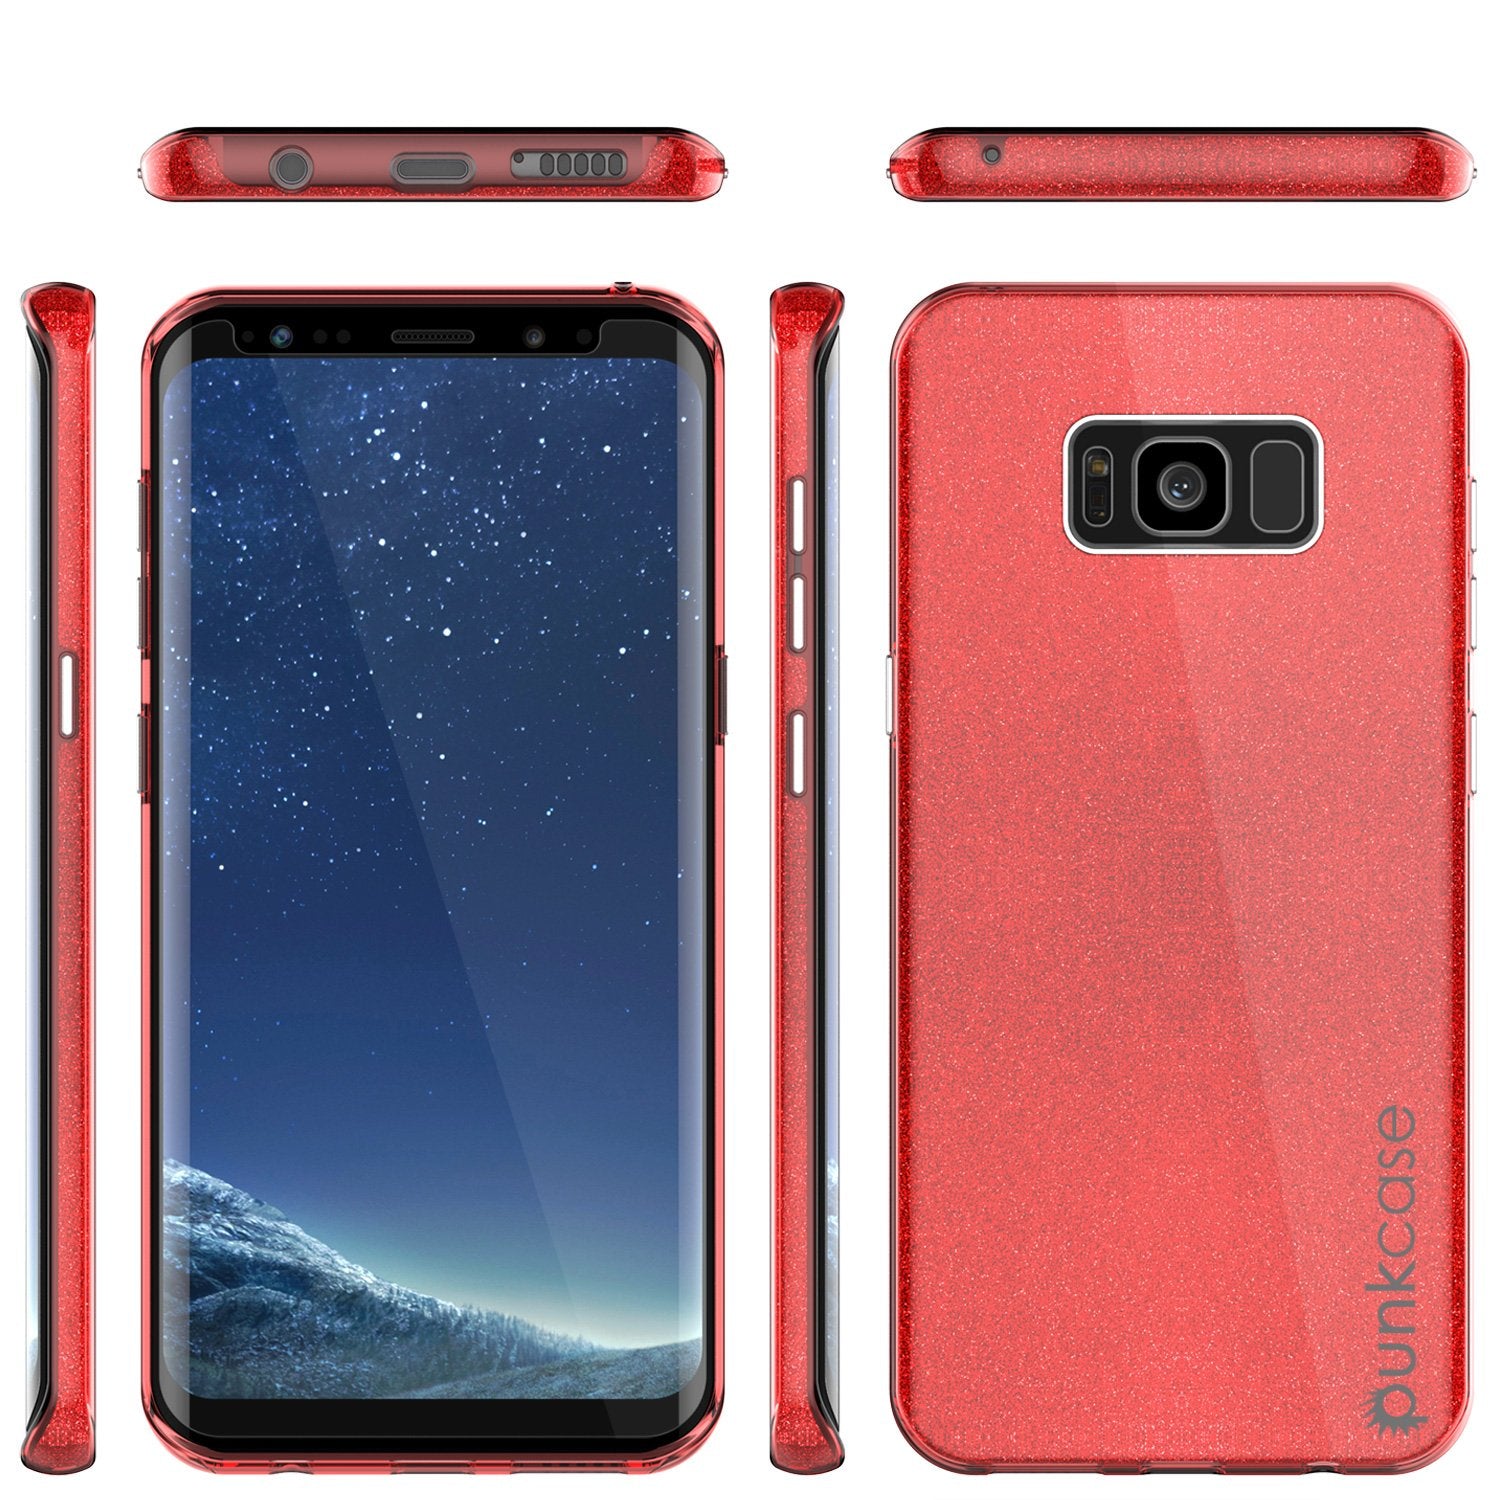 Galaxy S8 Plus Punkcase Galactic 2.0 Series Ultra Slim Case [Red]